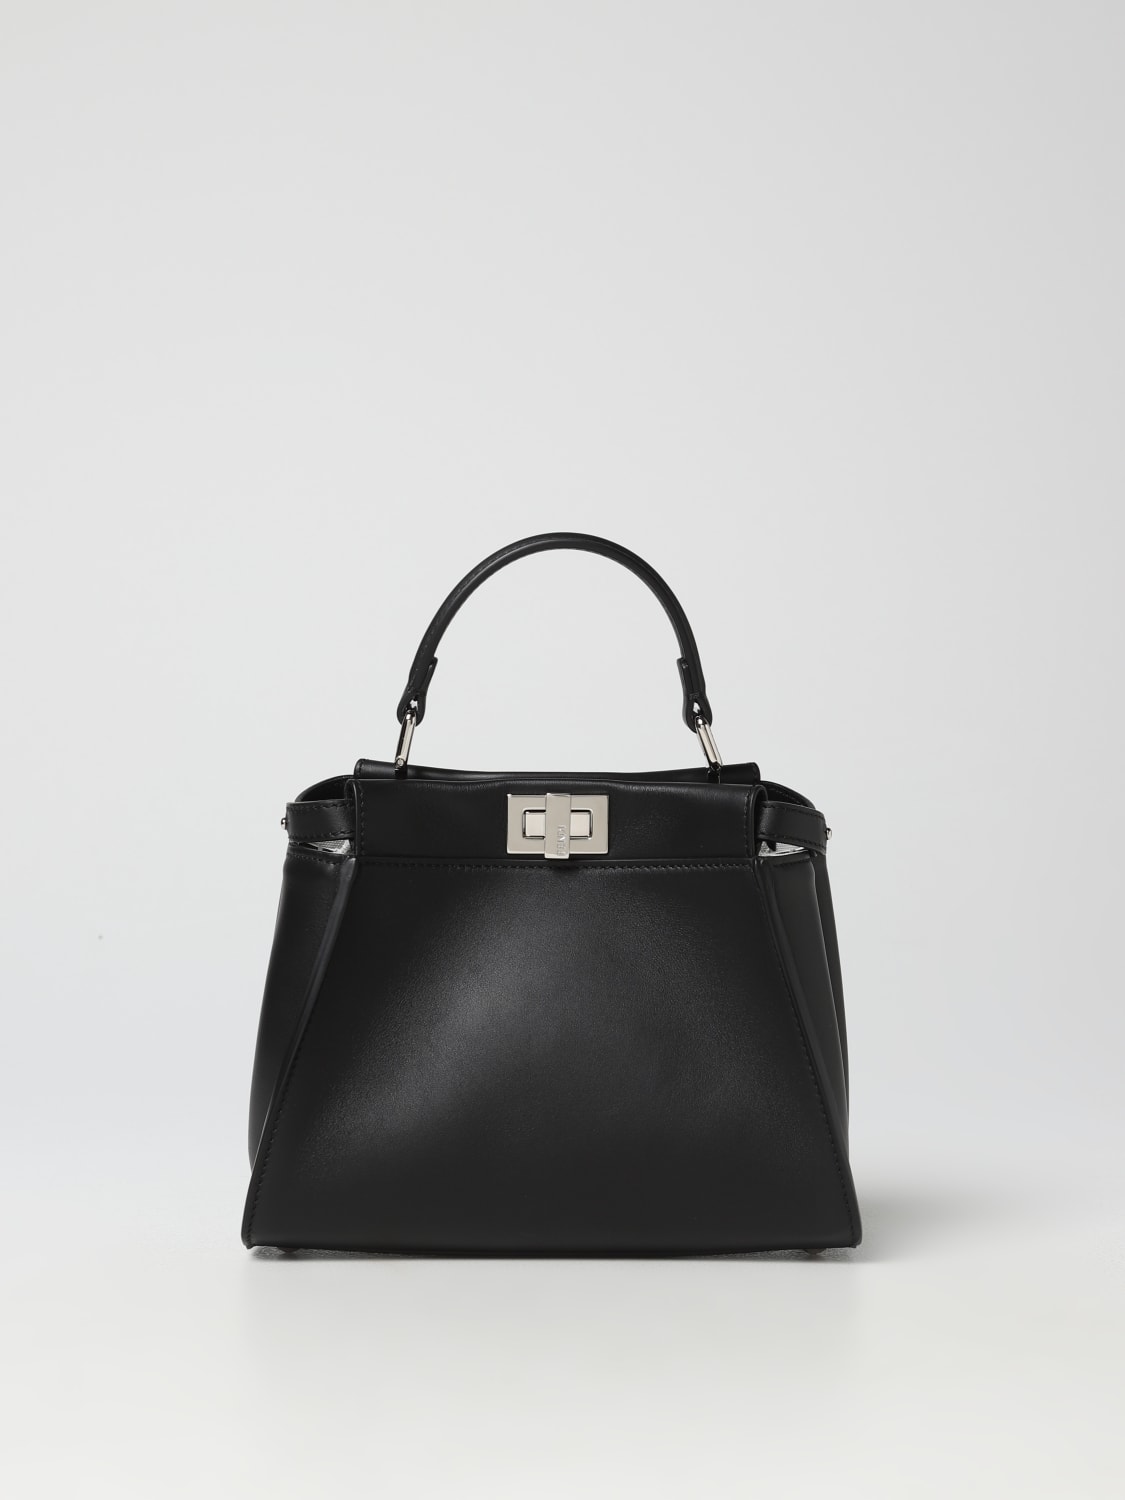 FENDI: Peekaboo smooth leather bag - Black | Fendi handbag 8BN244ANXU ...